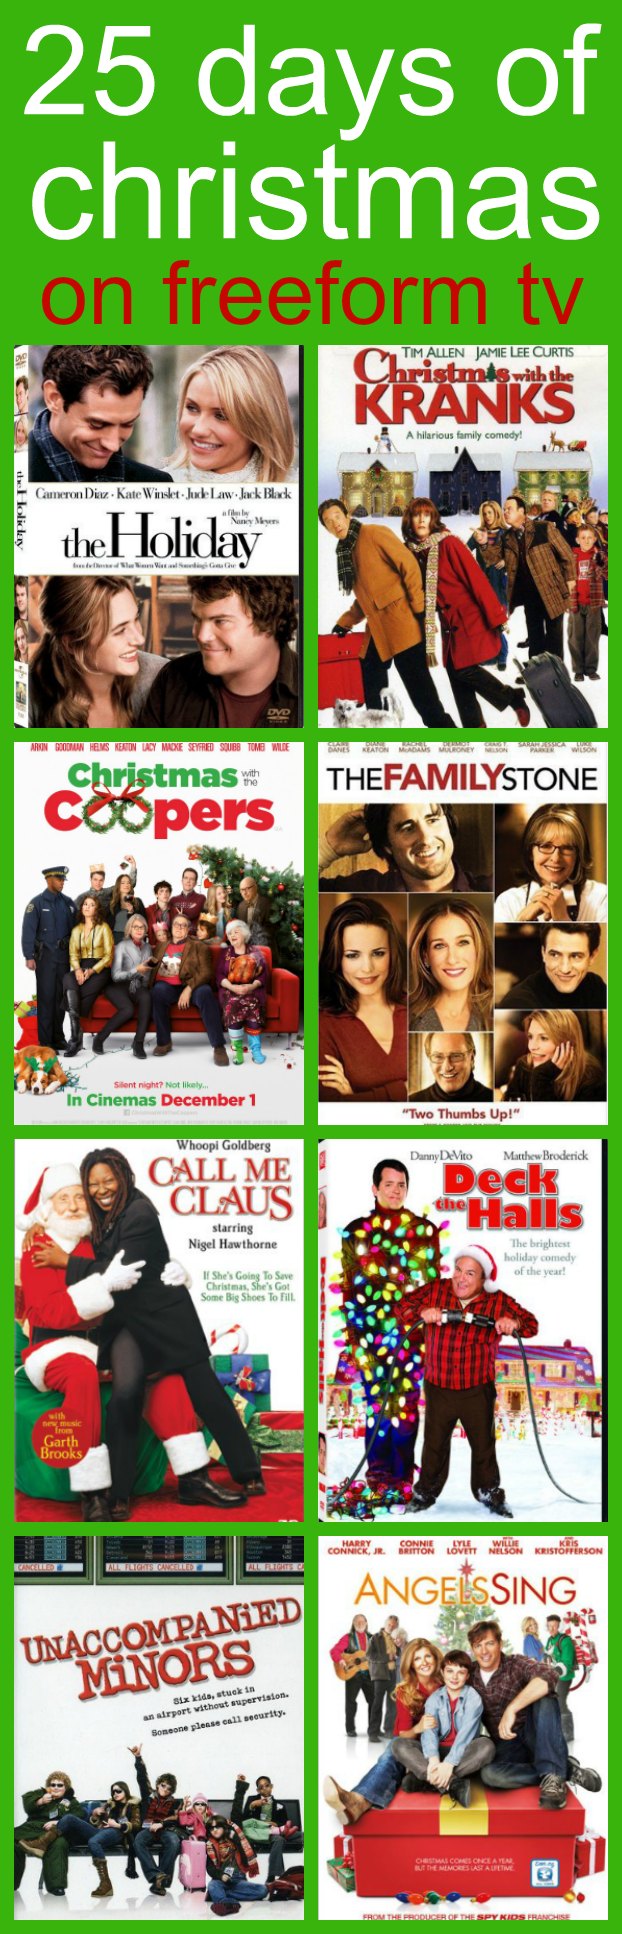 25 Days of Christmas Movies on Freeform TV